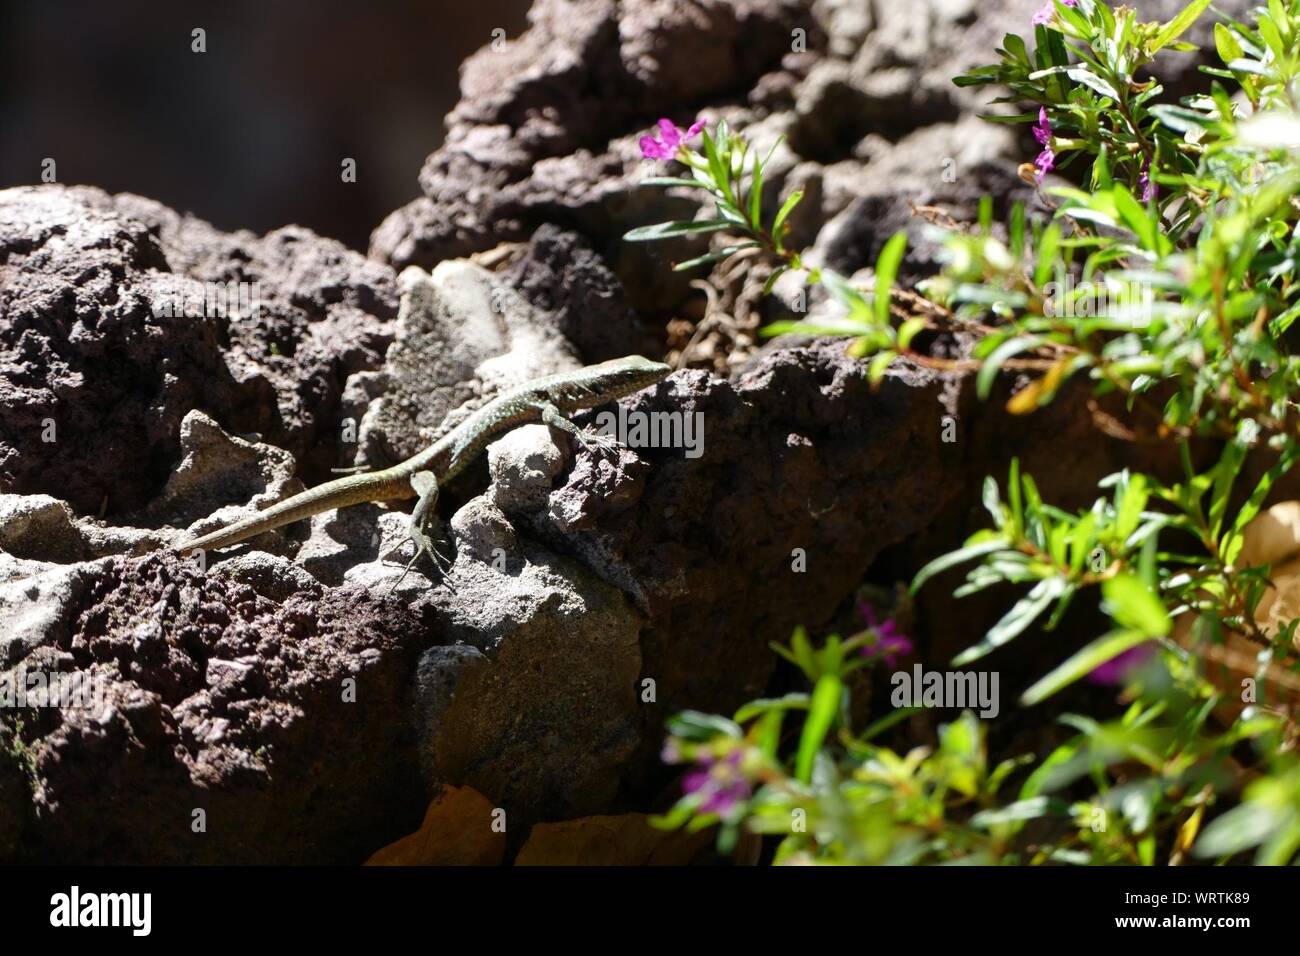 Lizard On Rock By Plant Stock Photo